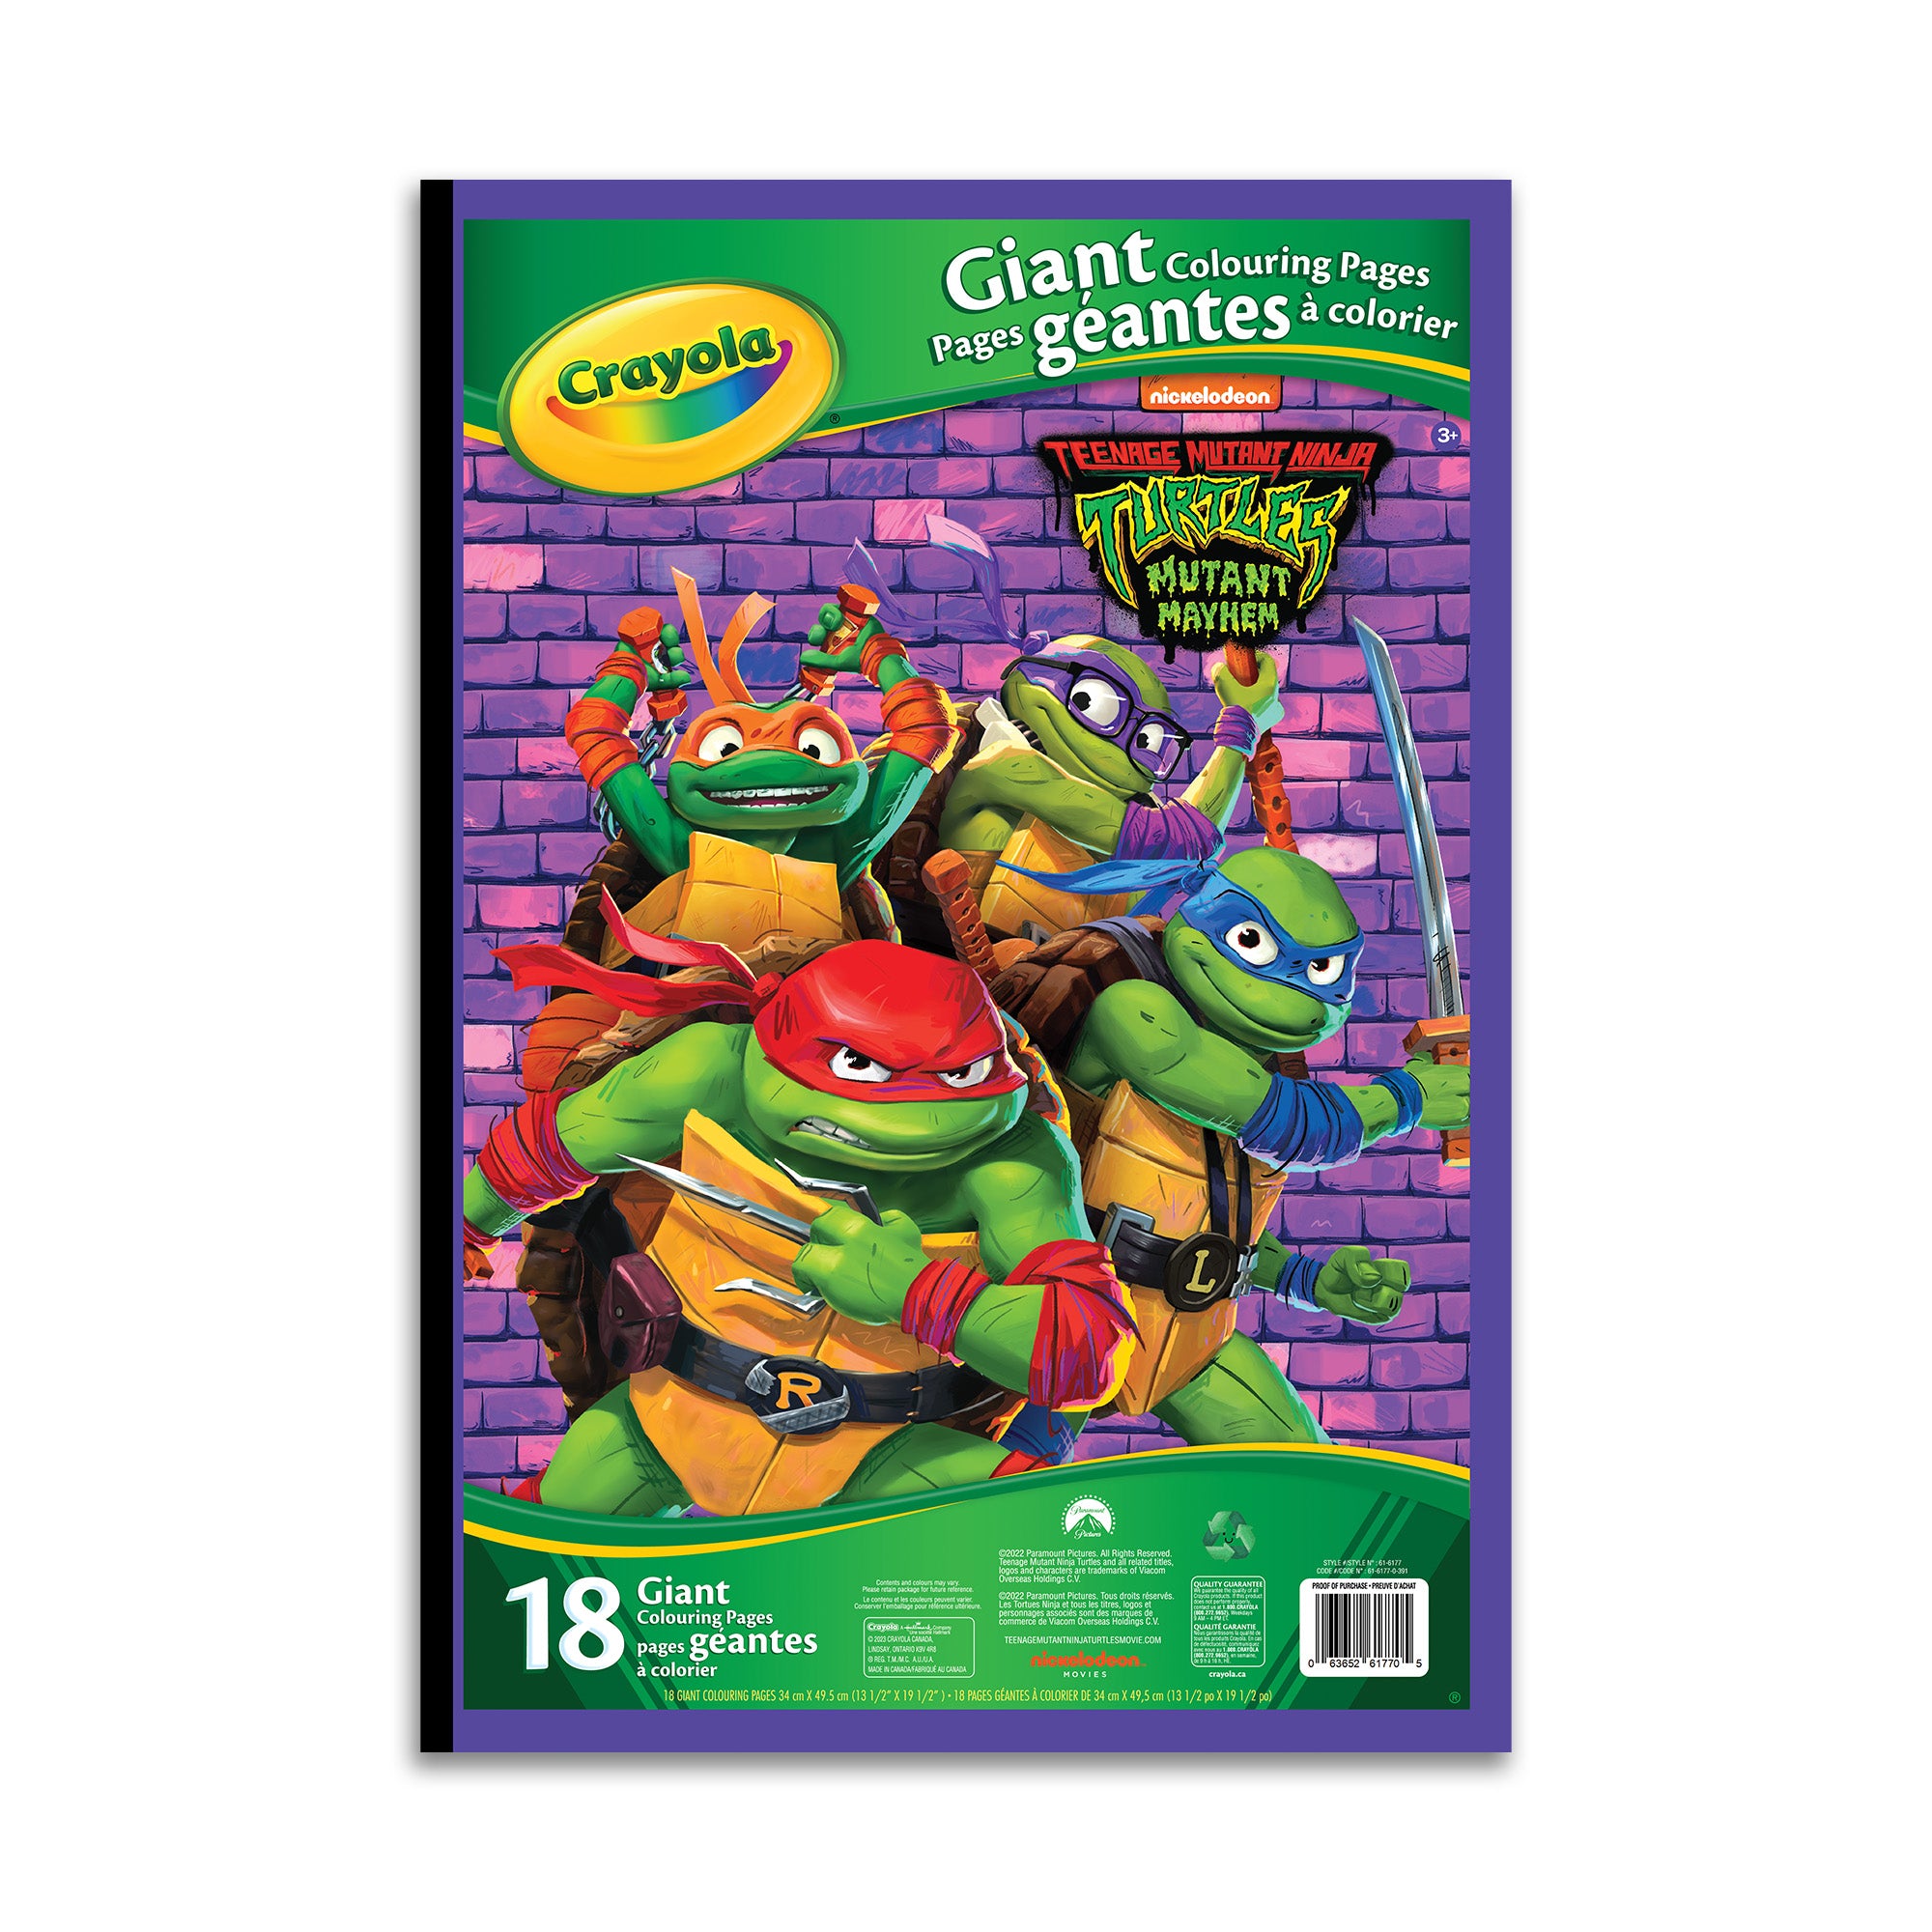 Crayola giant colouring pages teenage mutant ninja turtles â crayola nada